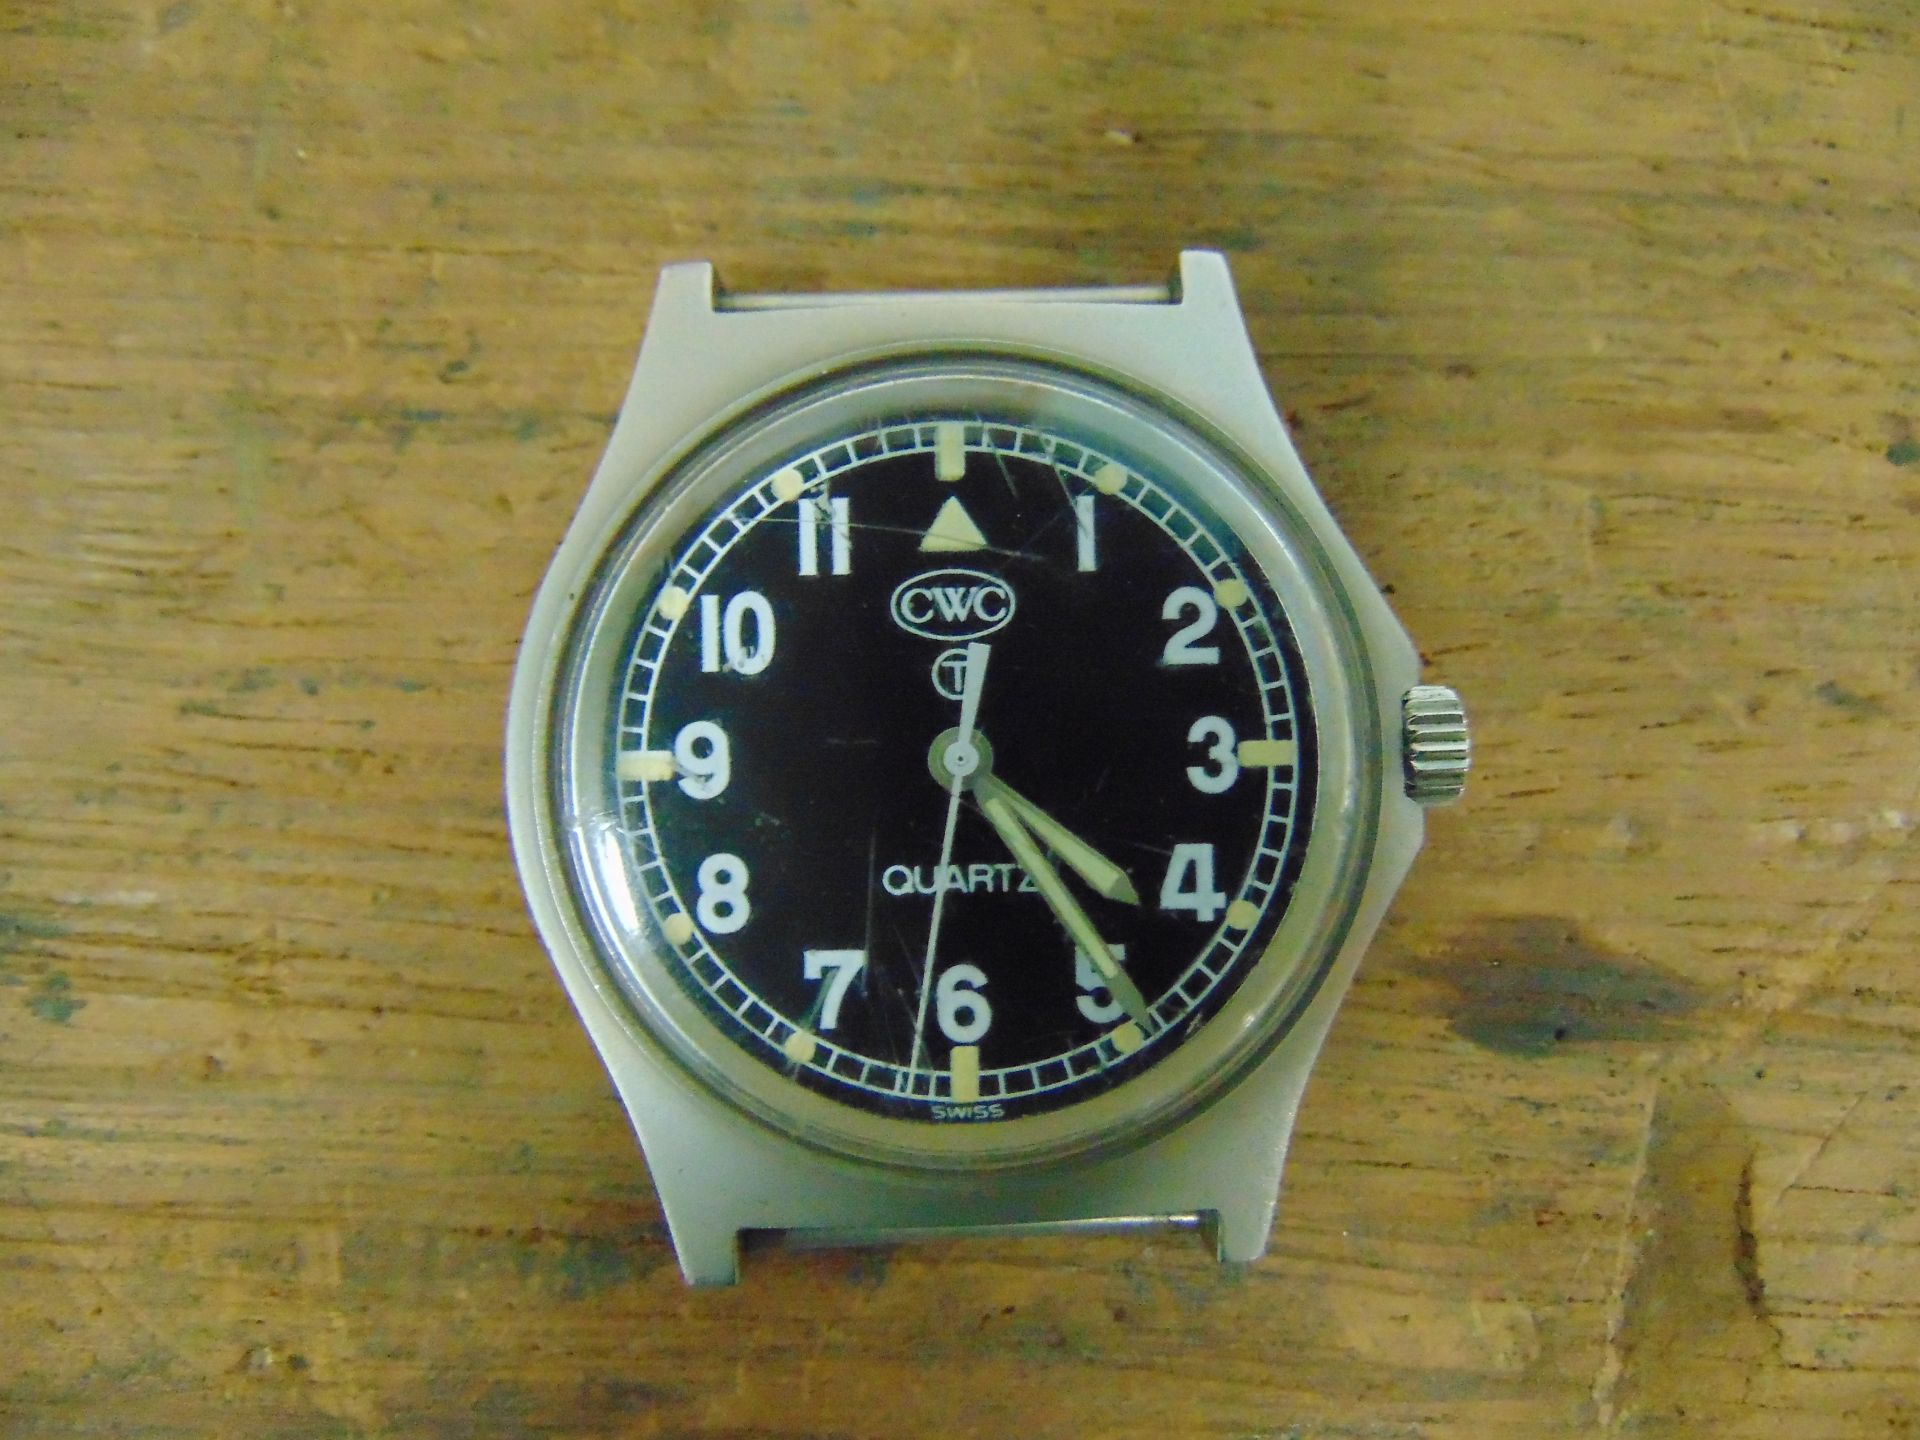 Genuine British Army, CWC quartz wrist watch - Image 2 of 3